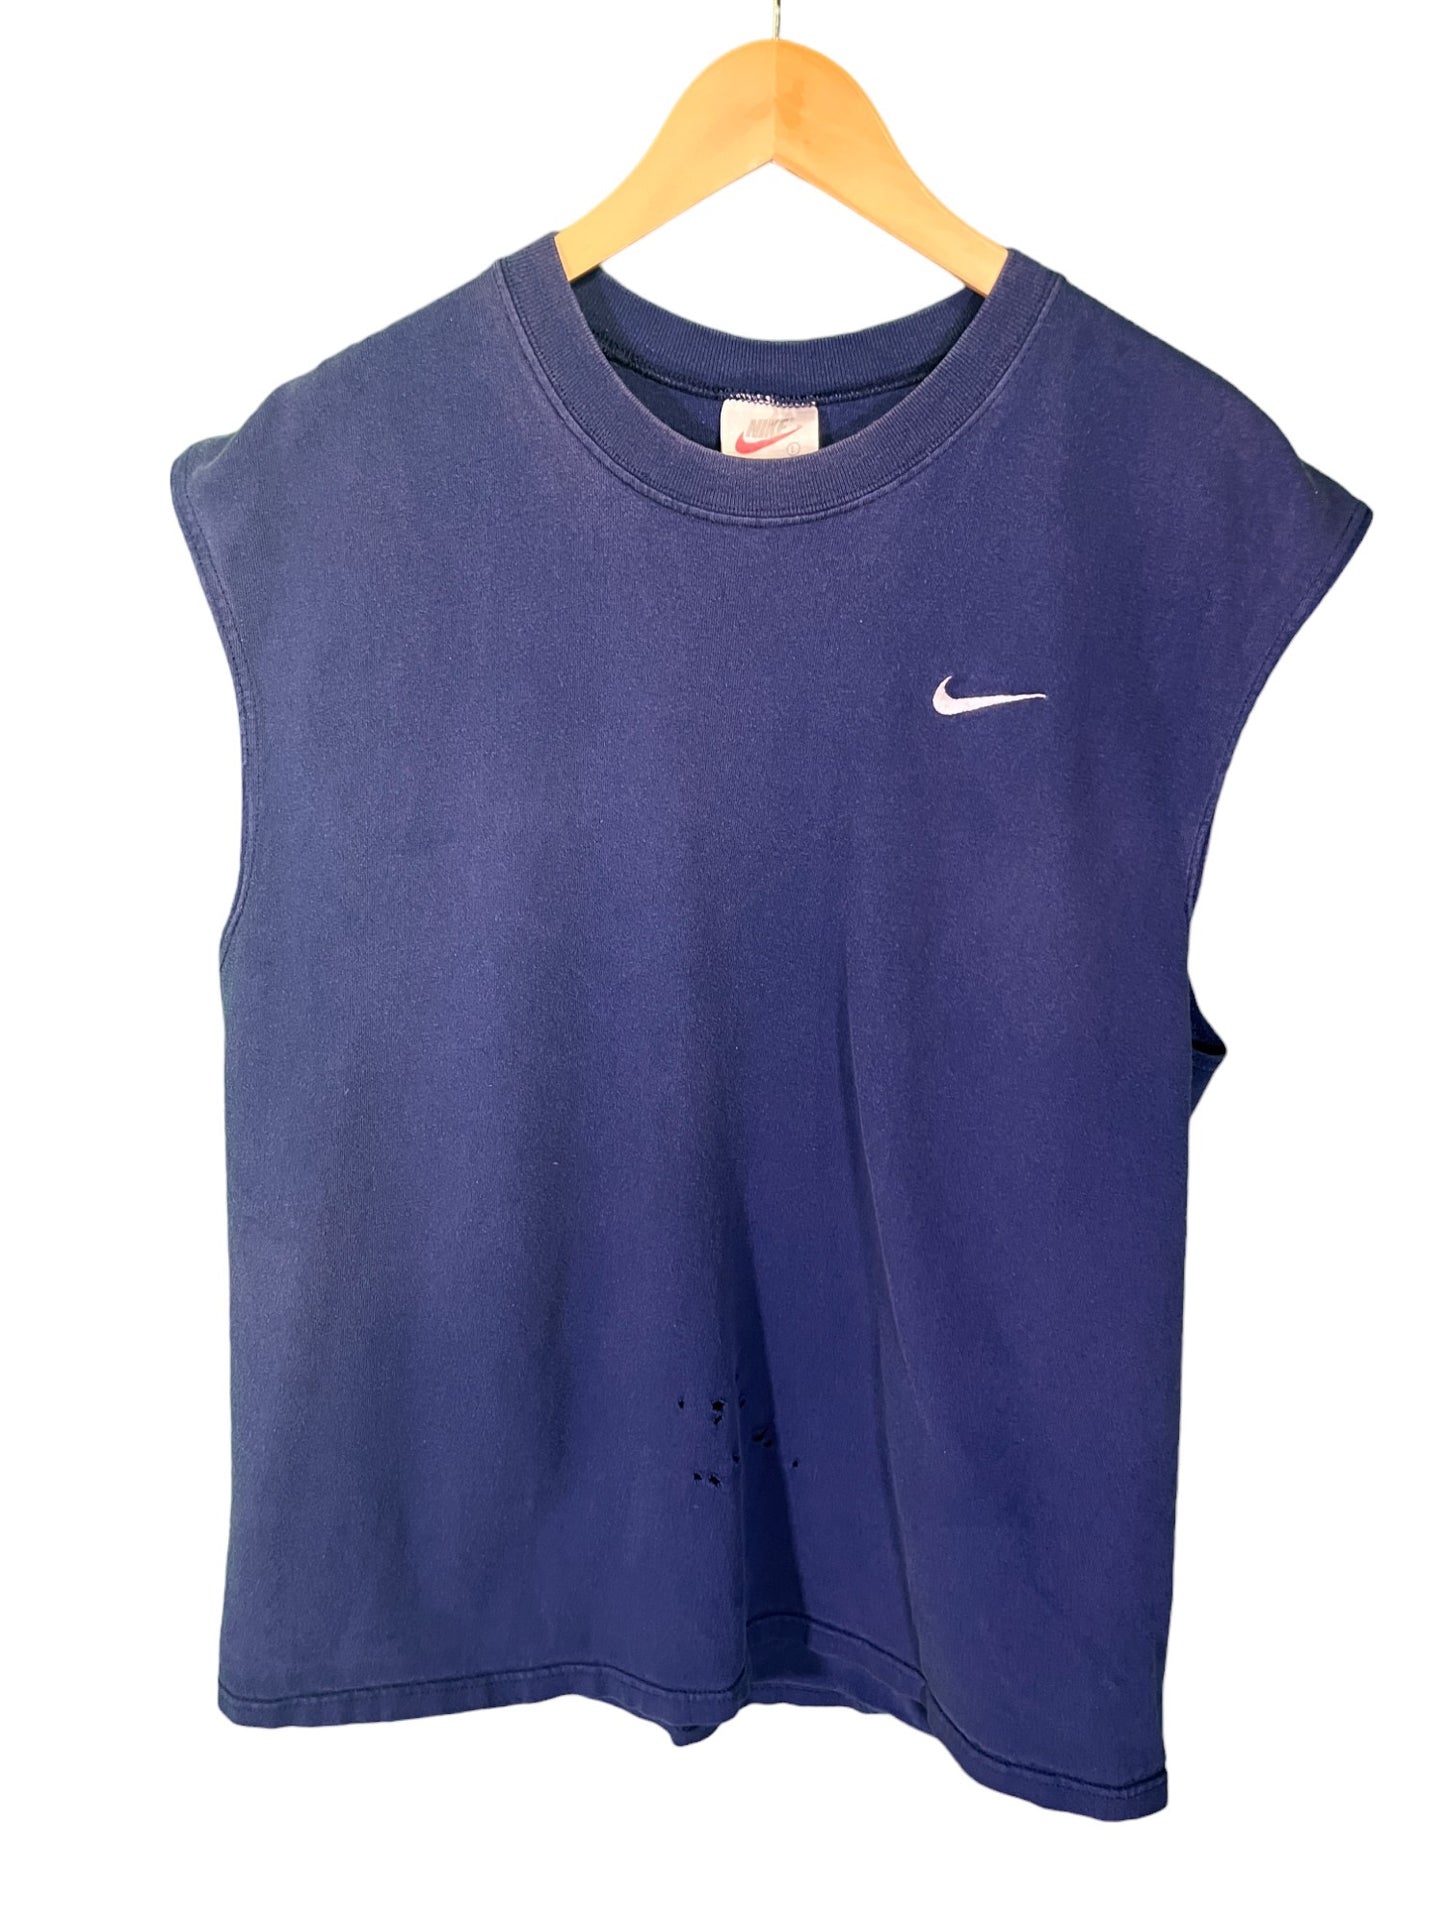 Vintage 90's Nike Center Swoosh Cutoff Blue Tee Size Large